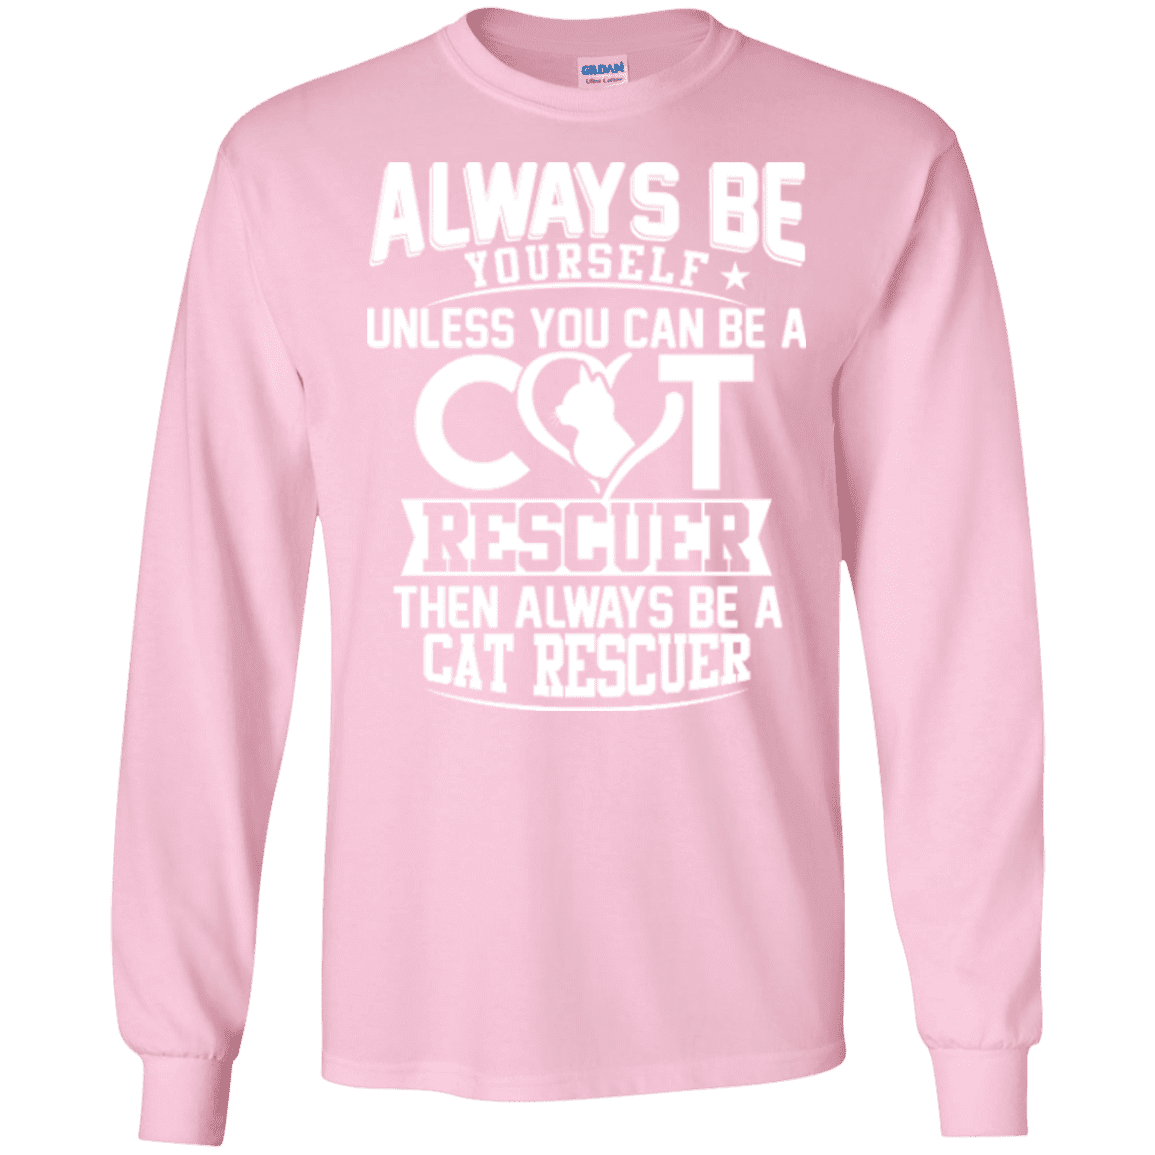 Always Be A Cat Rescuer - Long Sleeve T Shirt.